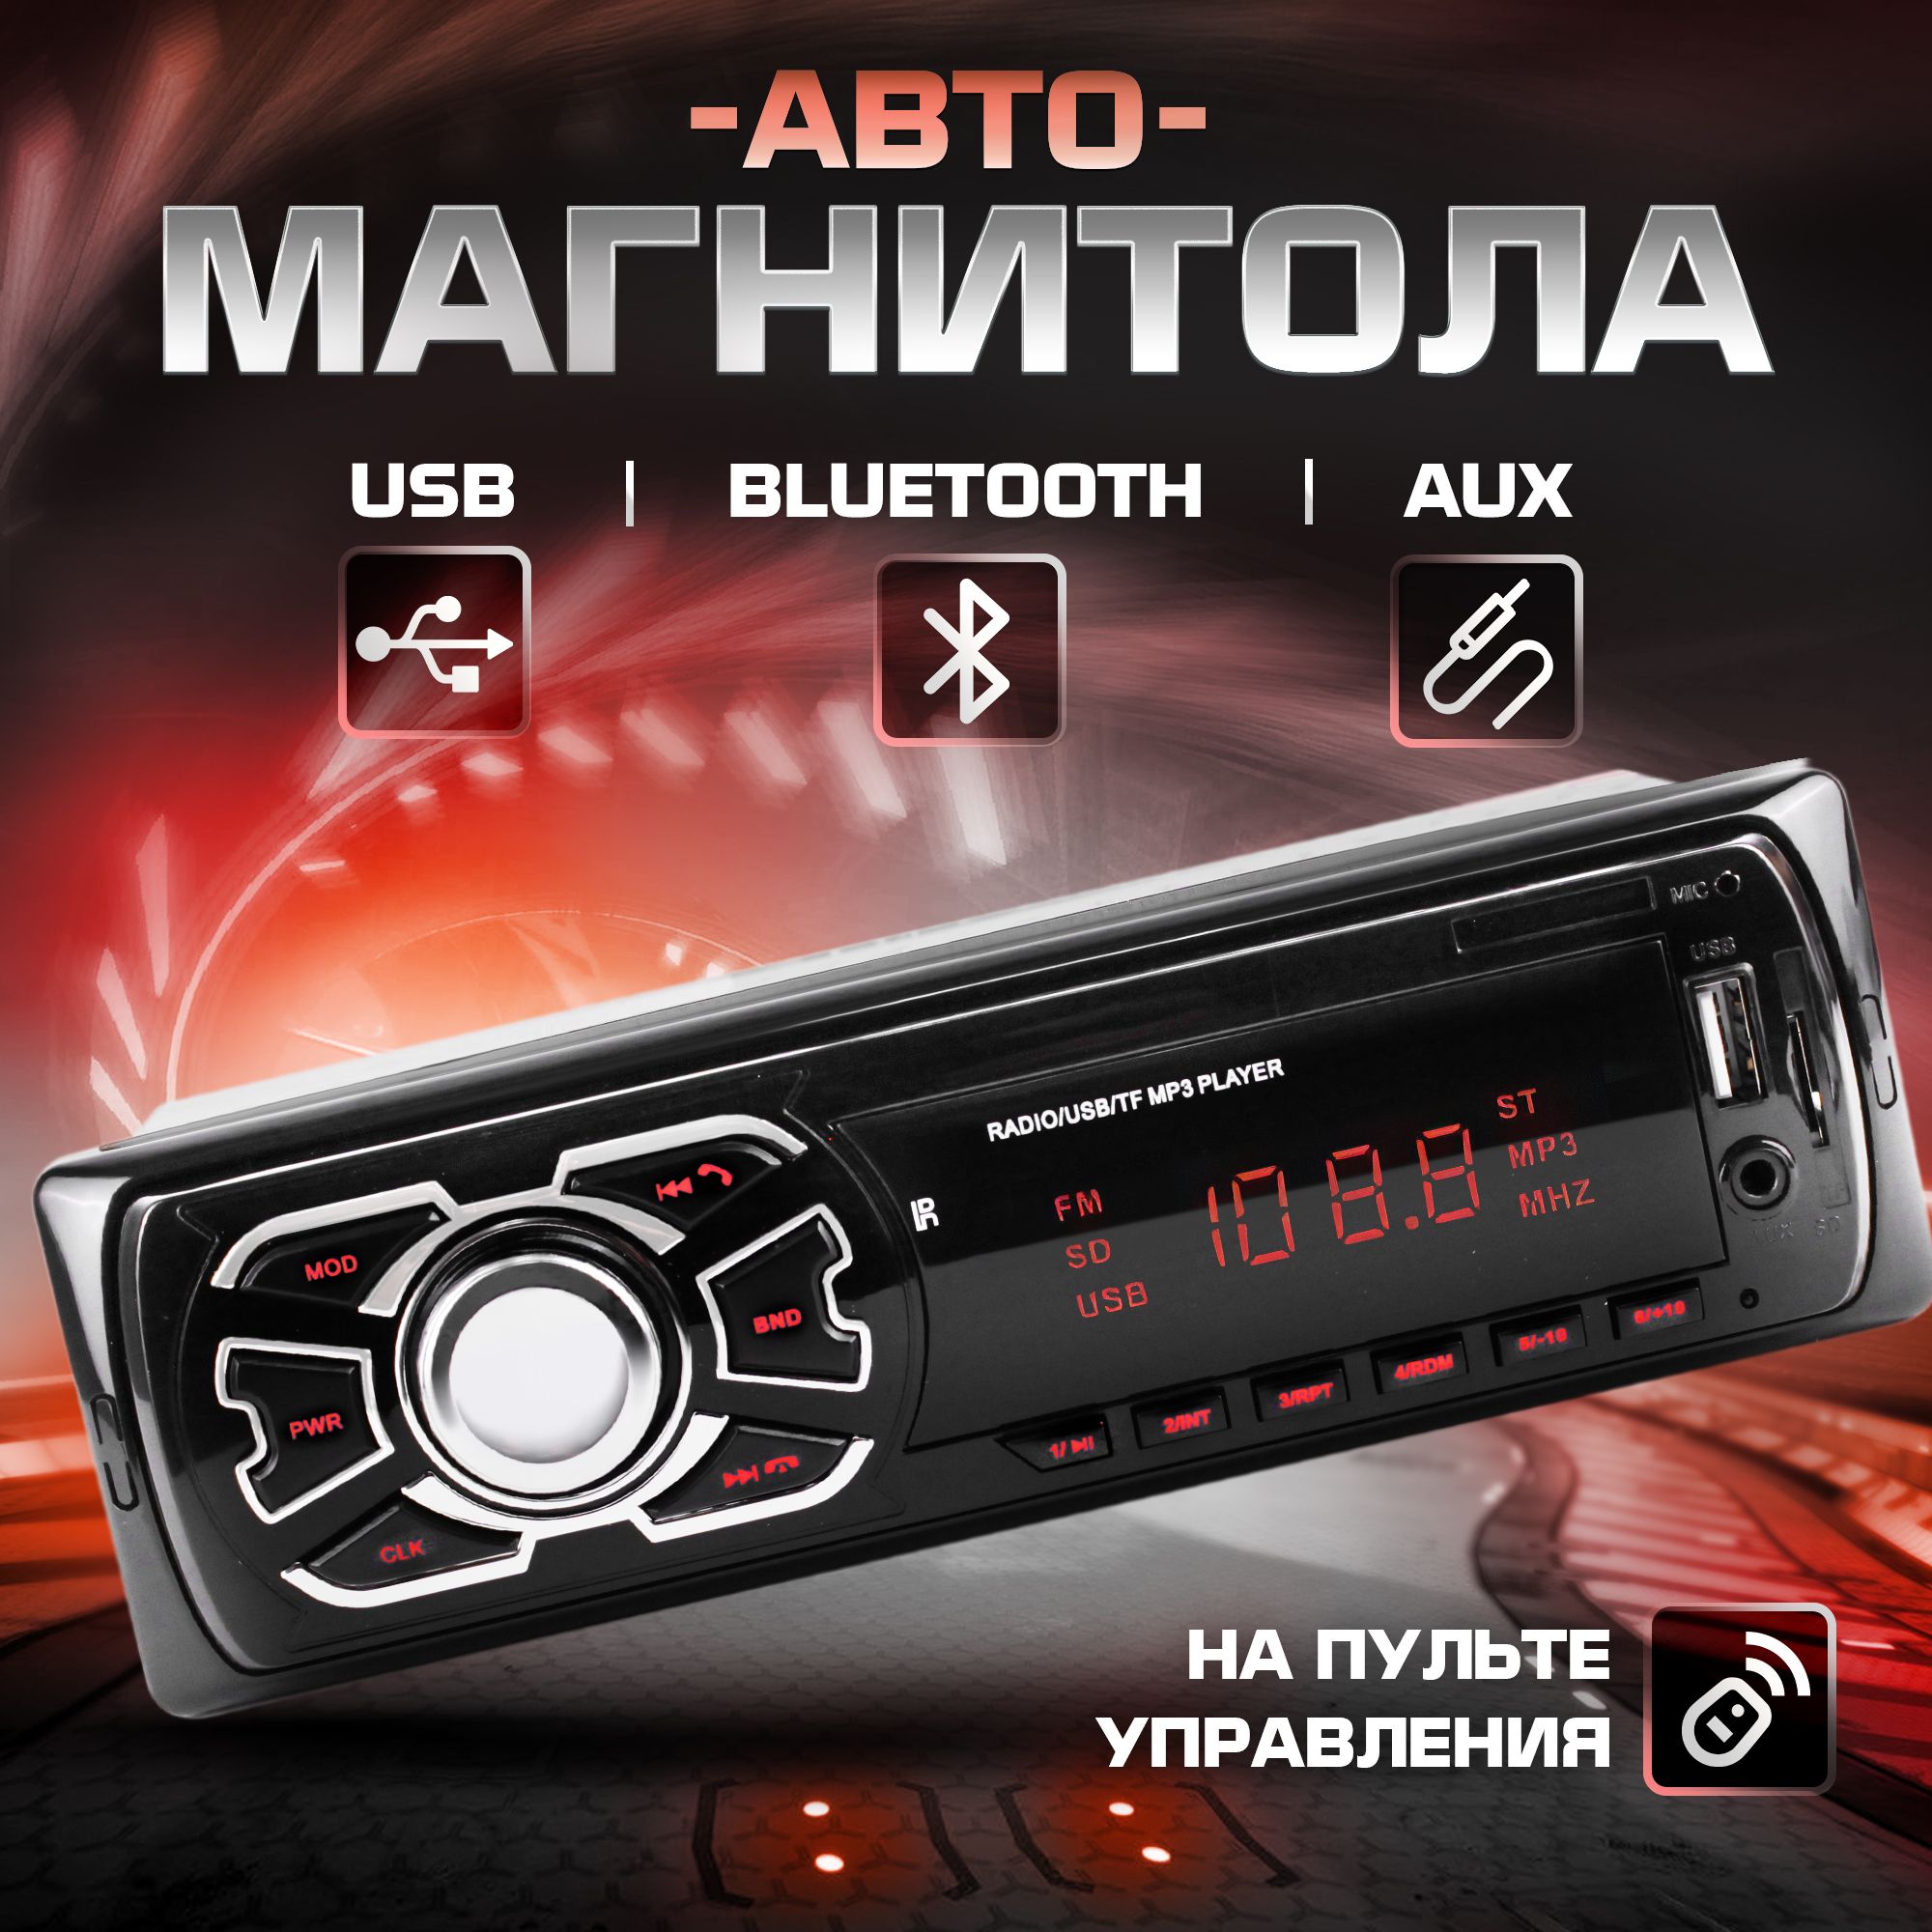 АвтомагнитолаTakaraA709FM,USB,AUX,Bluetooth+пультуправления